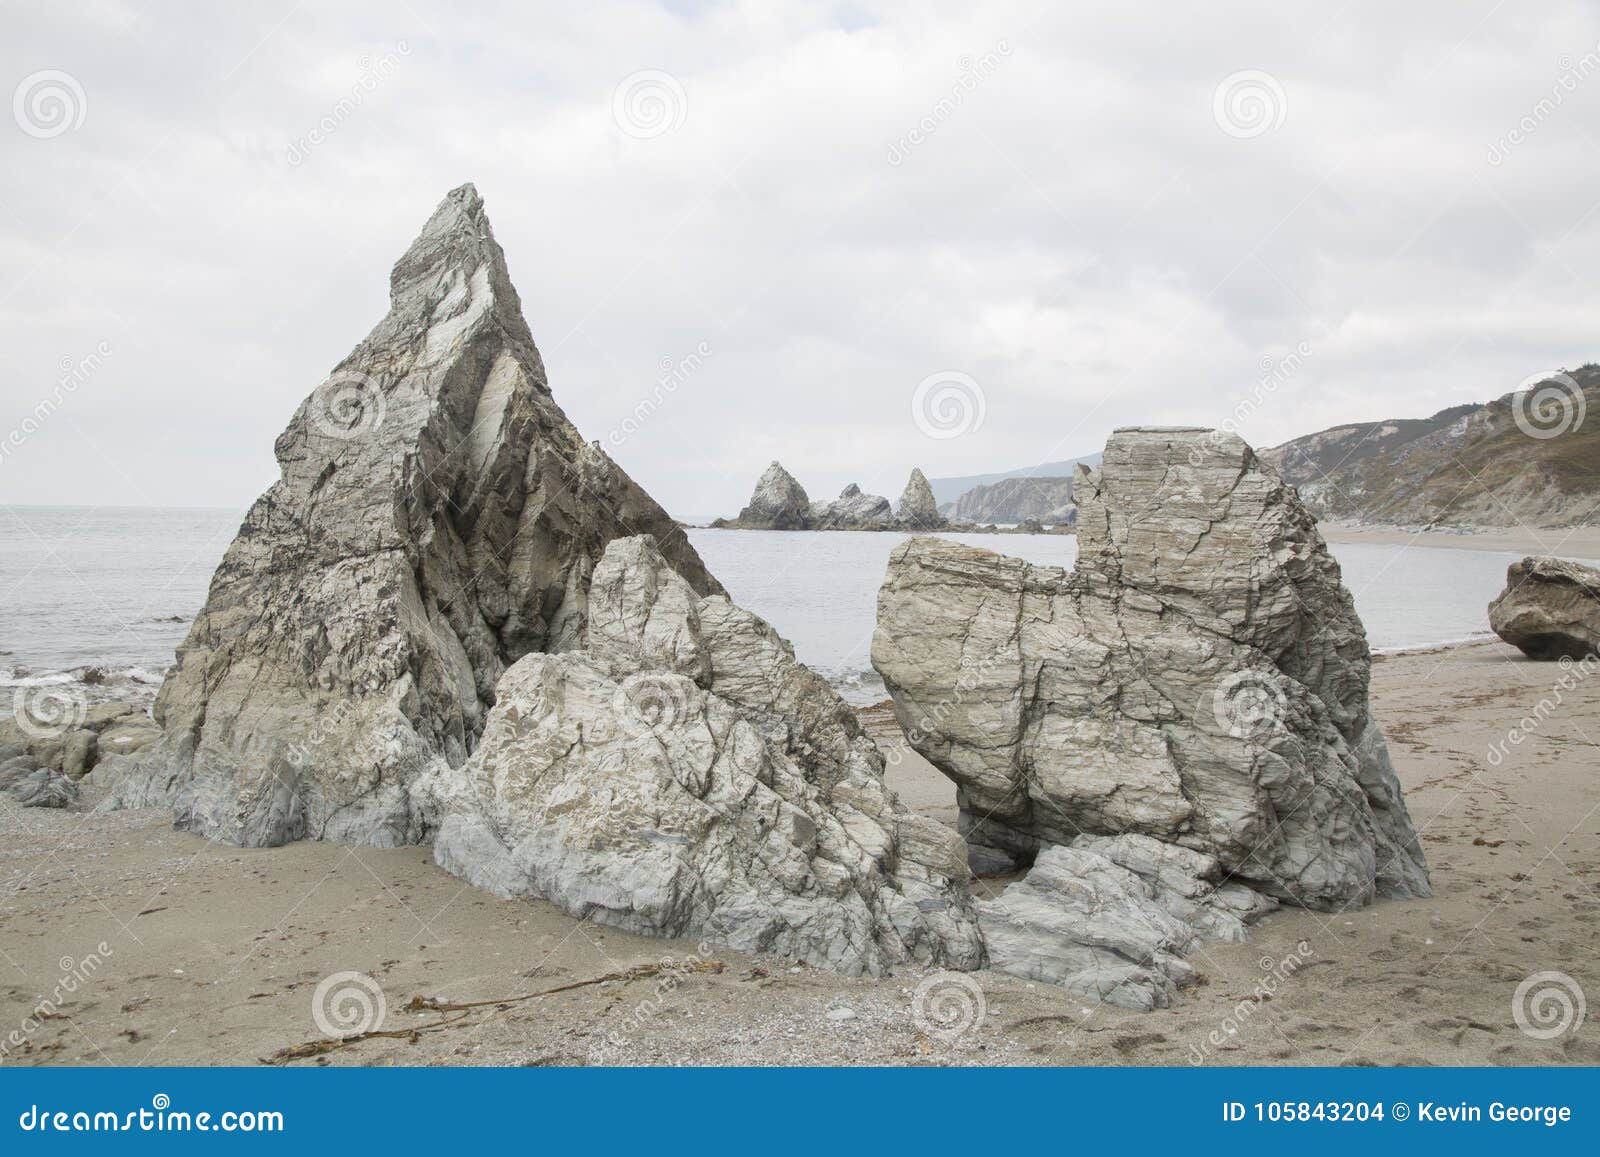 rock on carro beach; galicia